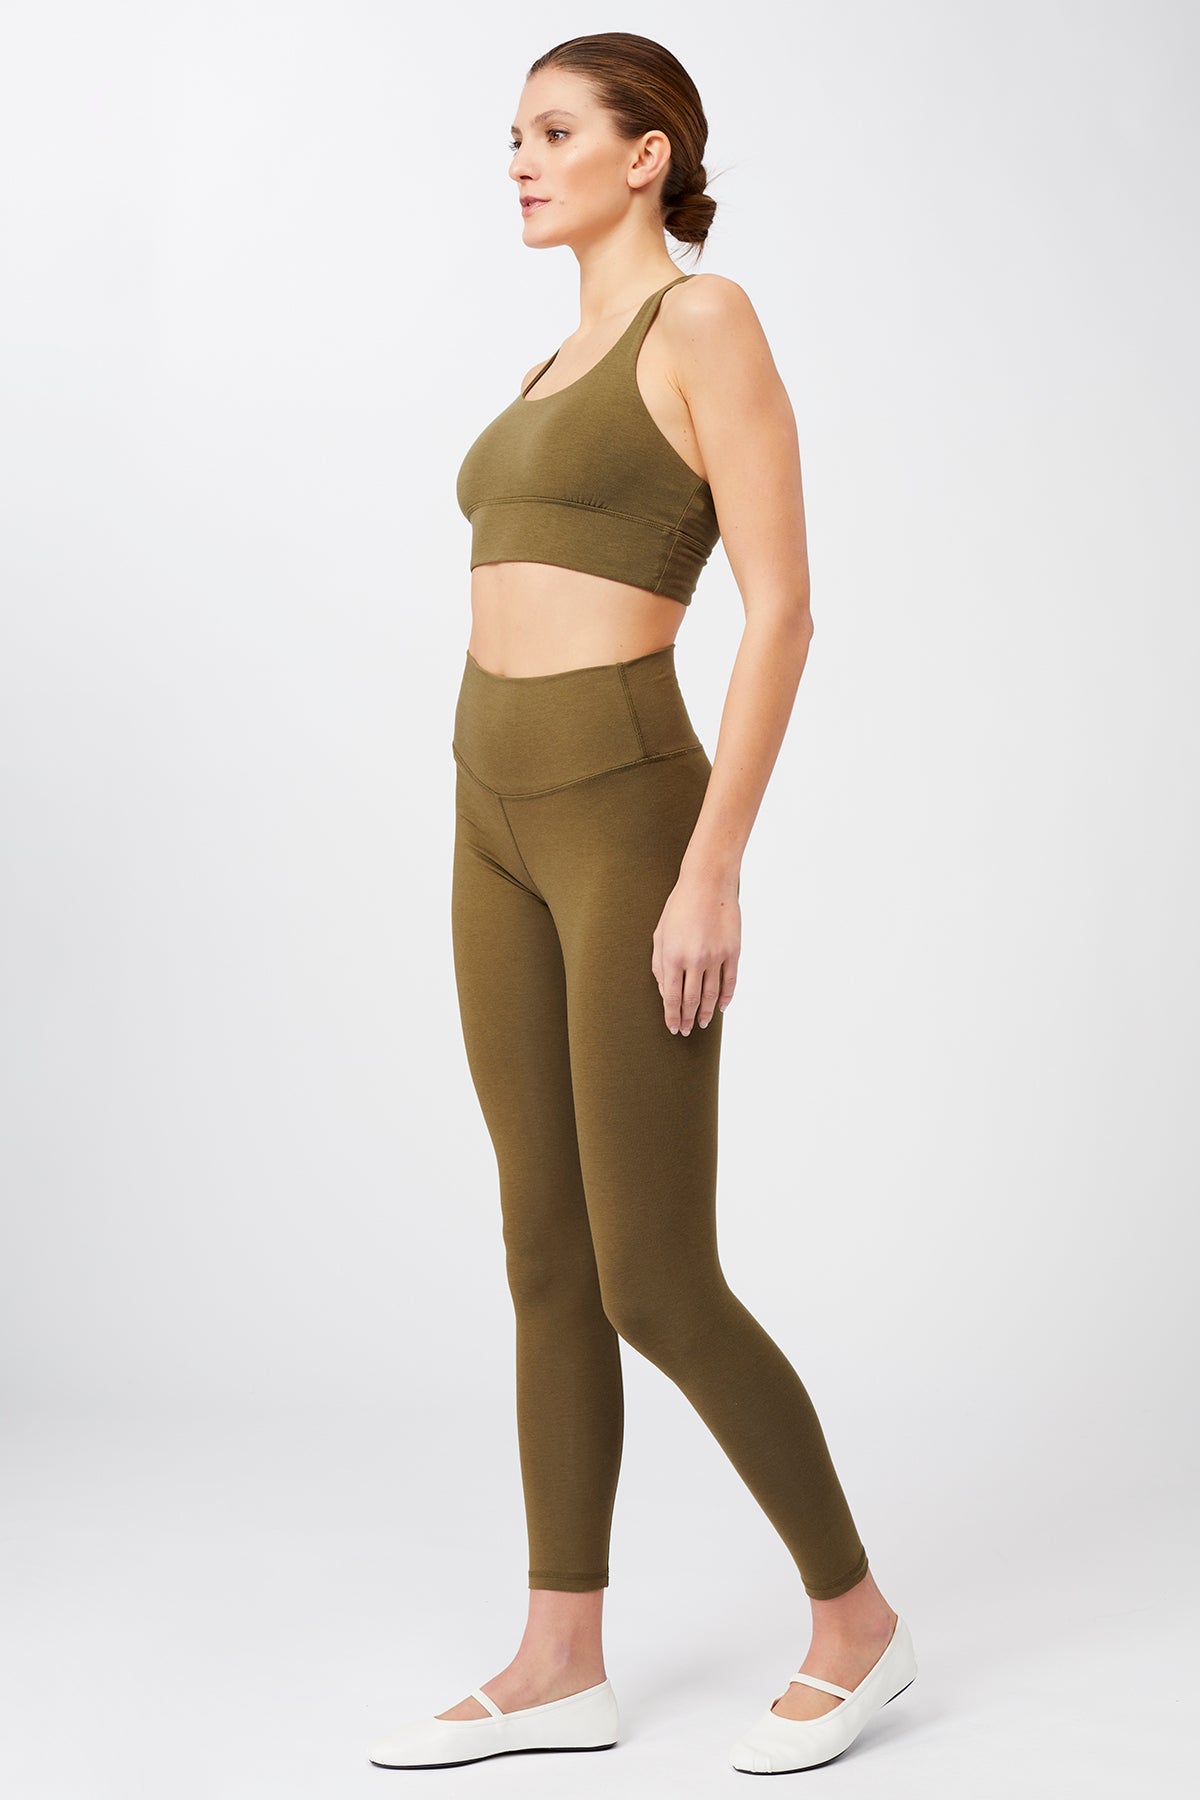 Mandala Yoga Legging Grün Outfit Front - Best Loved Legging